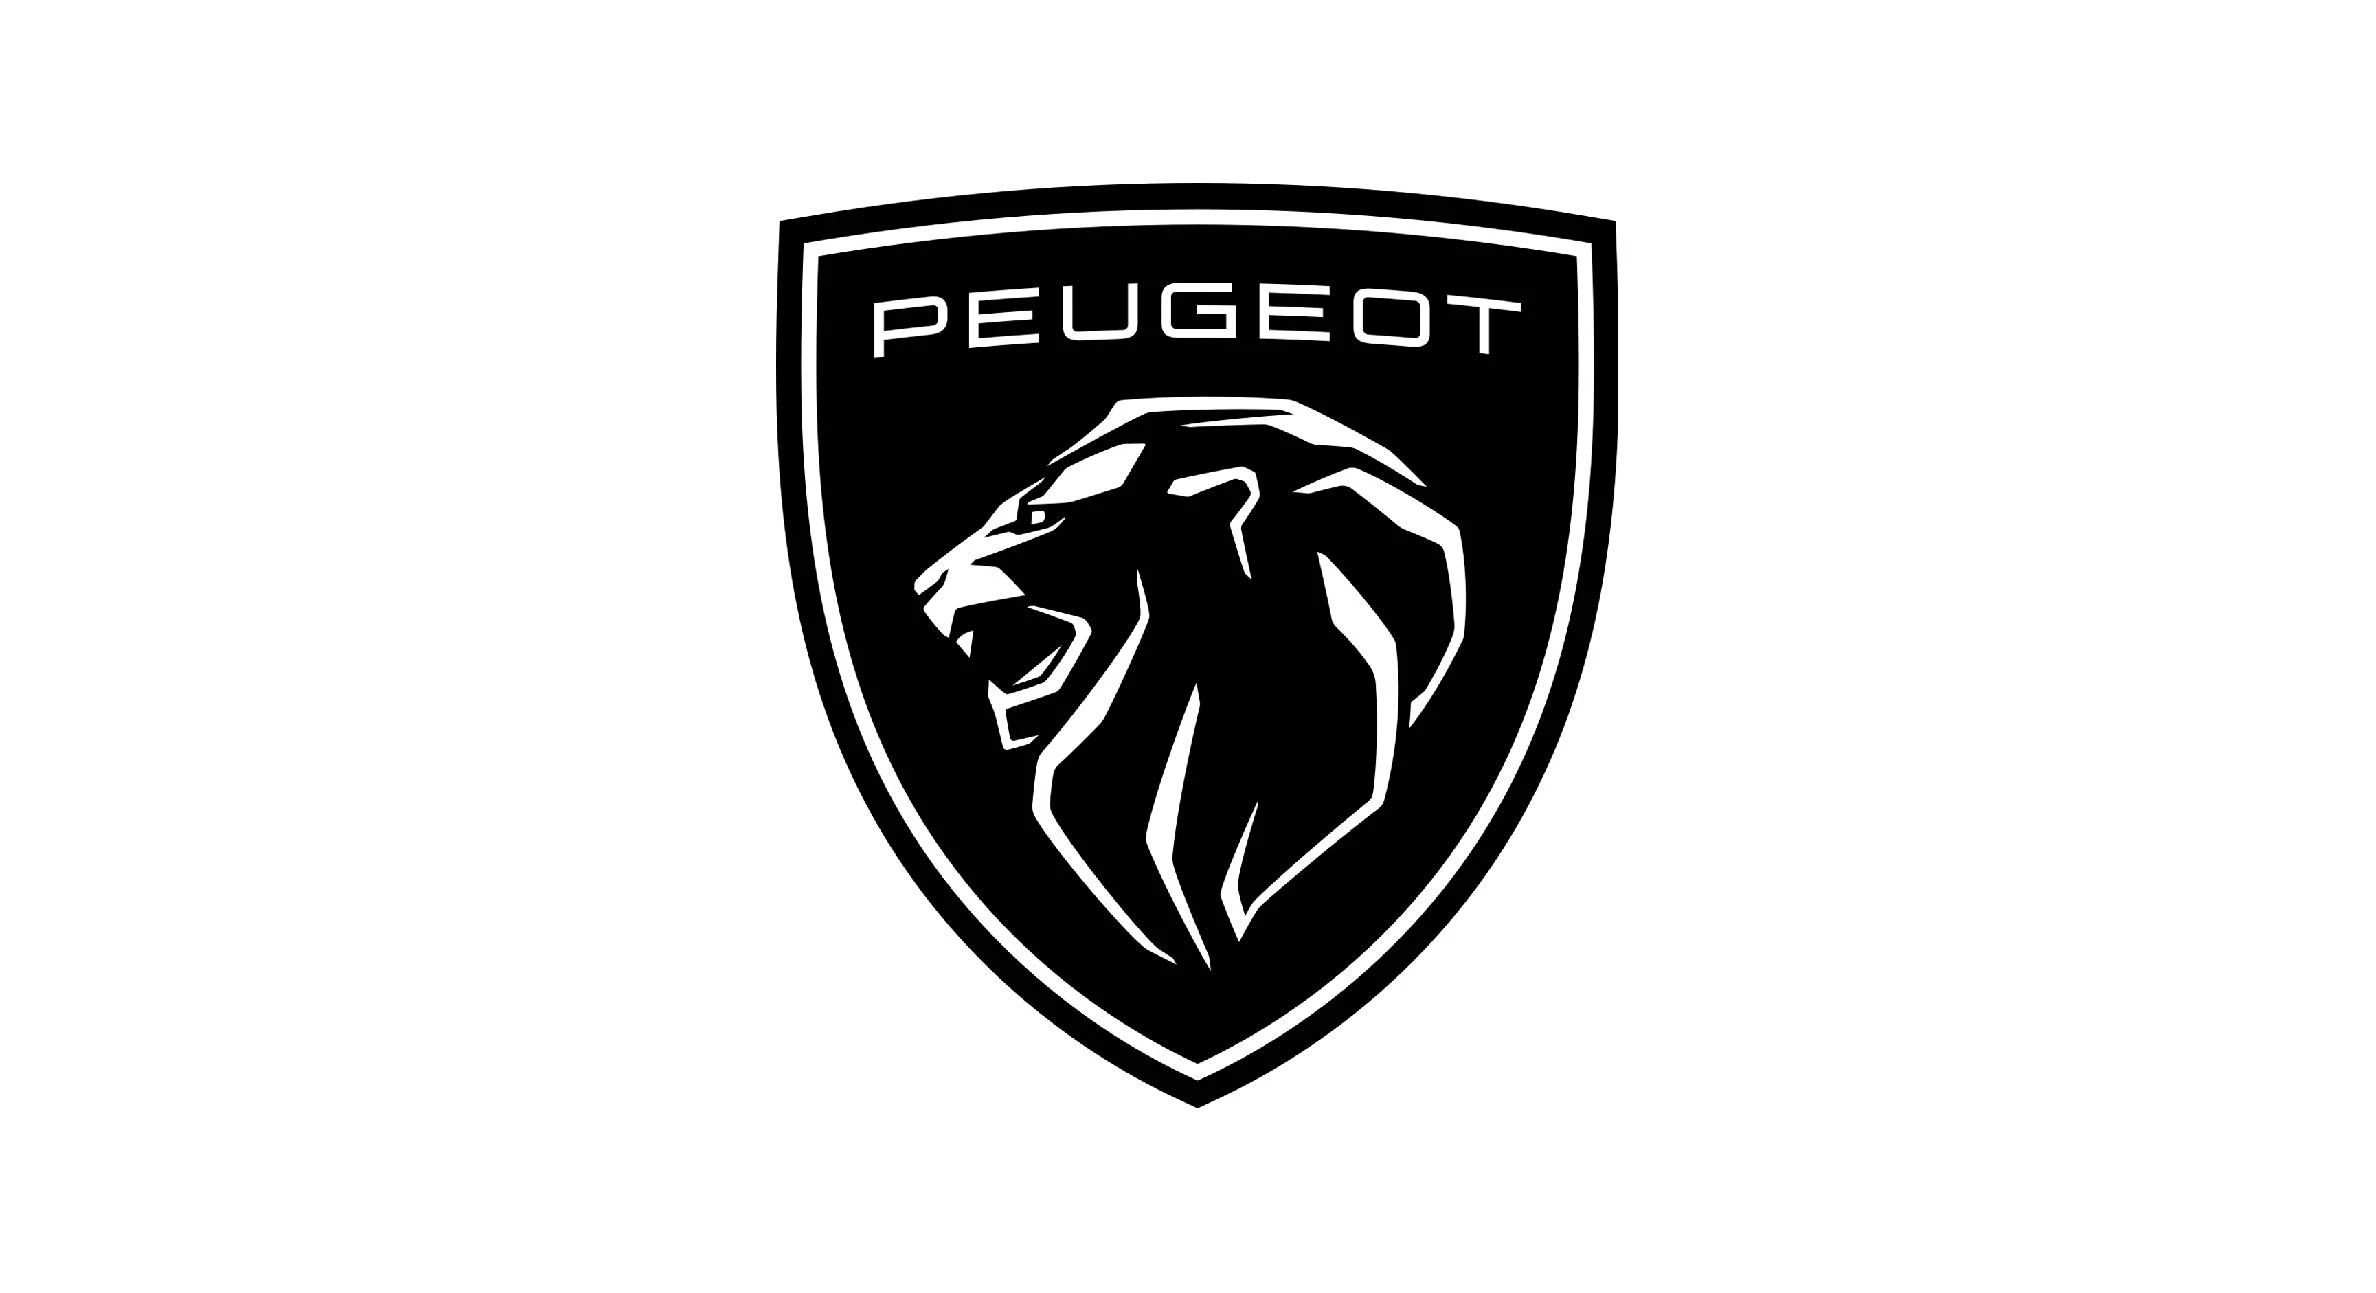 Peugeot car brand logo